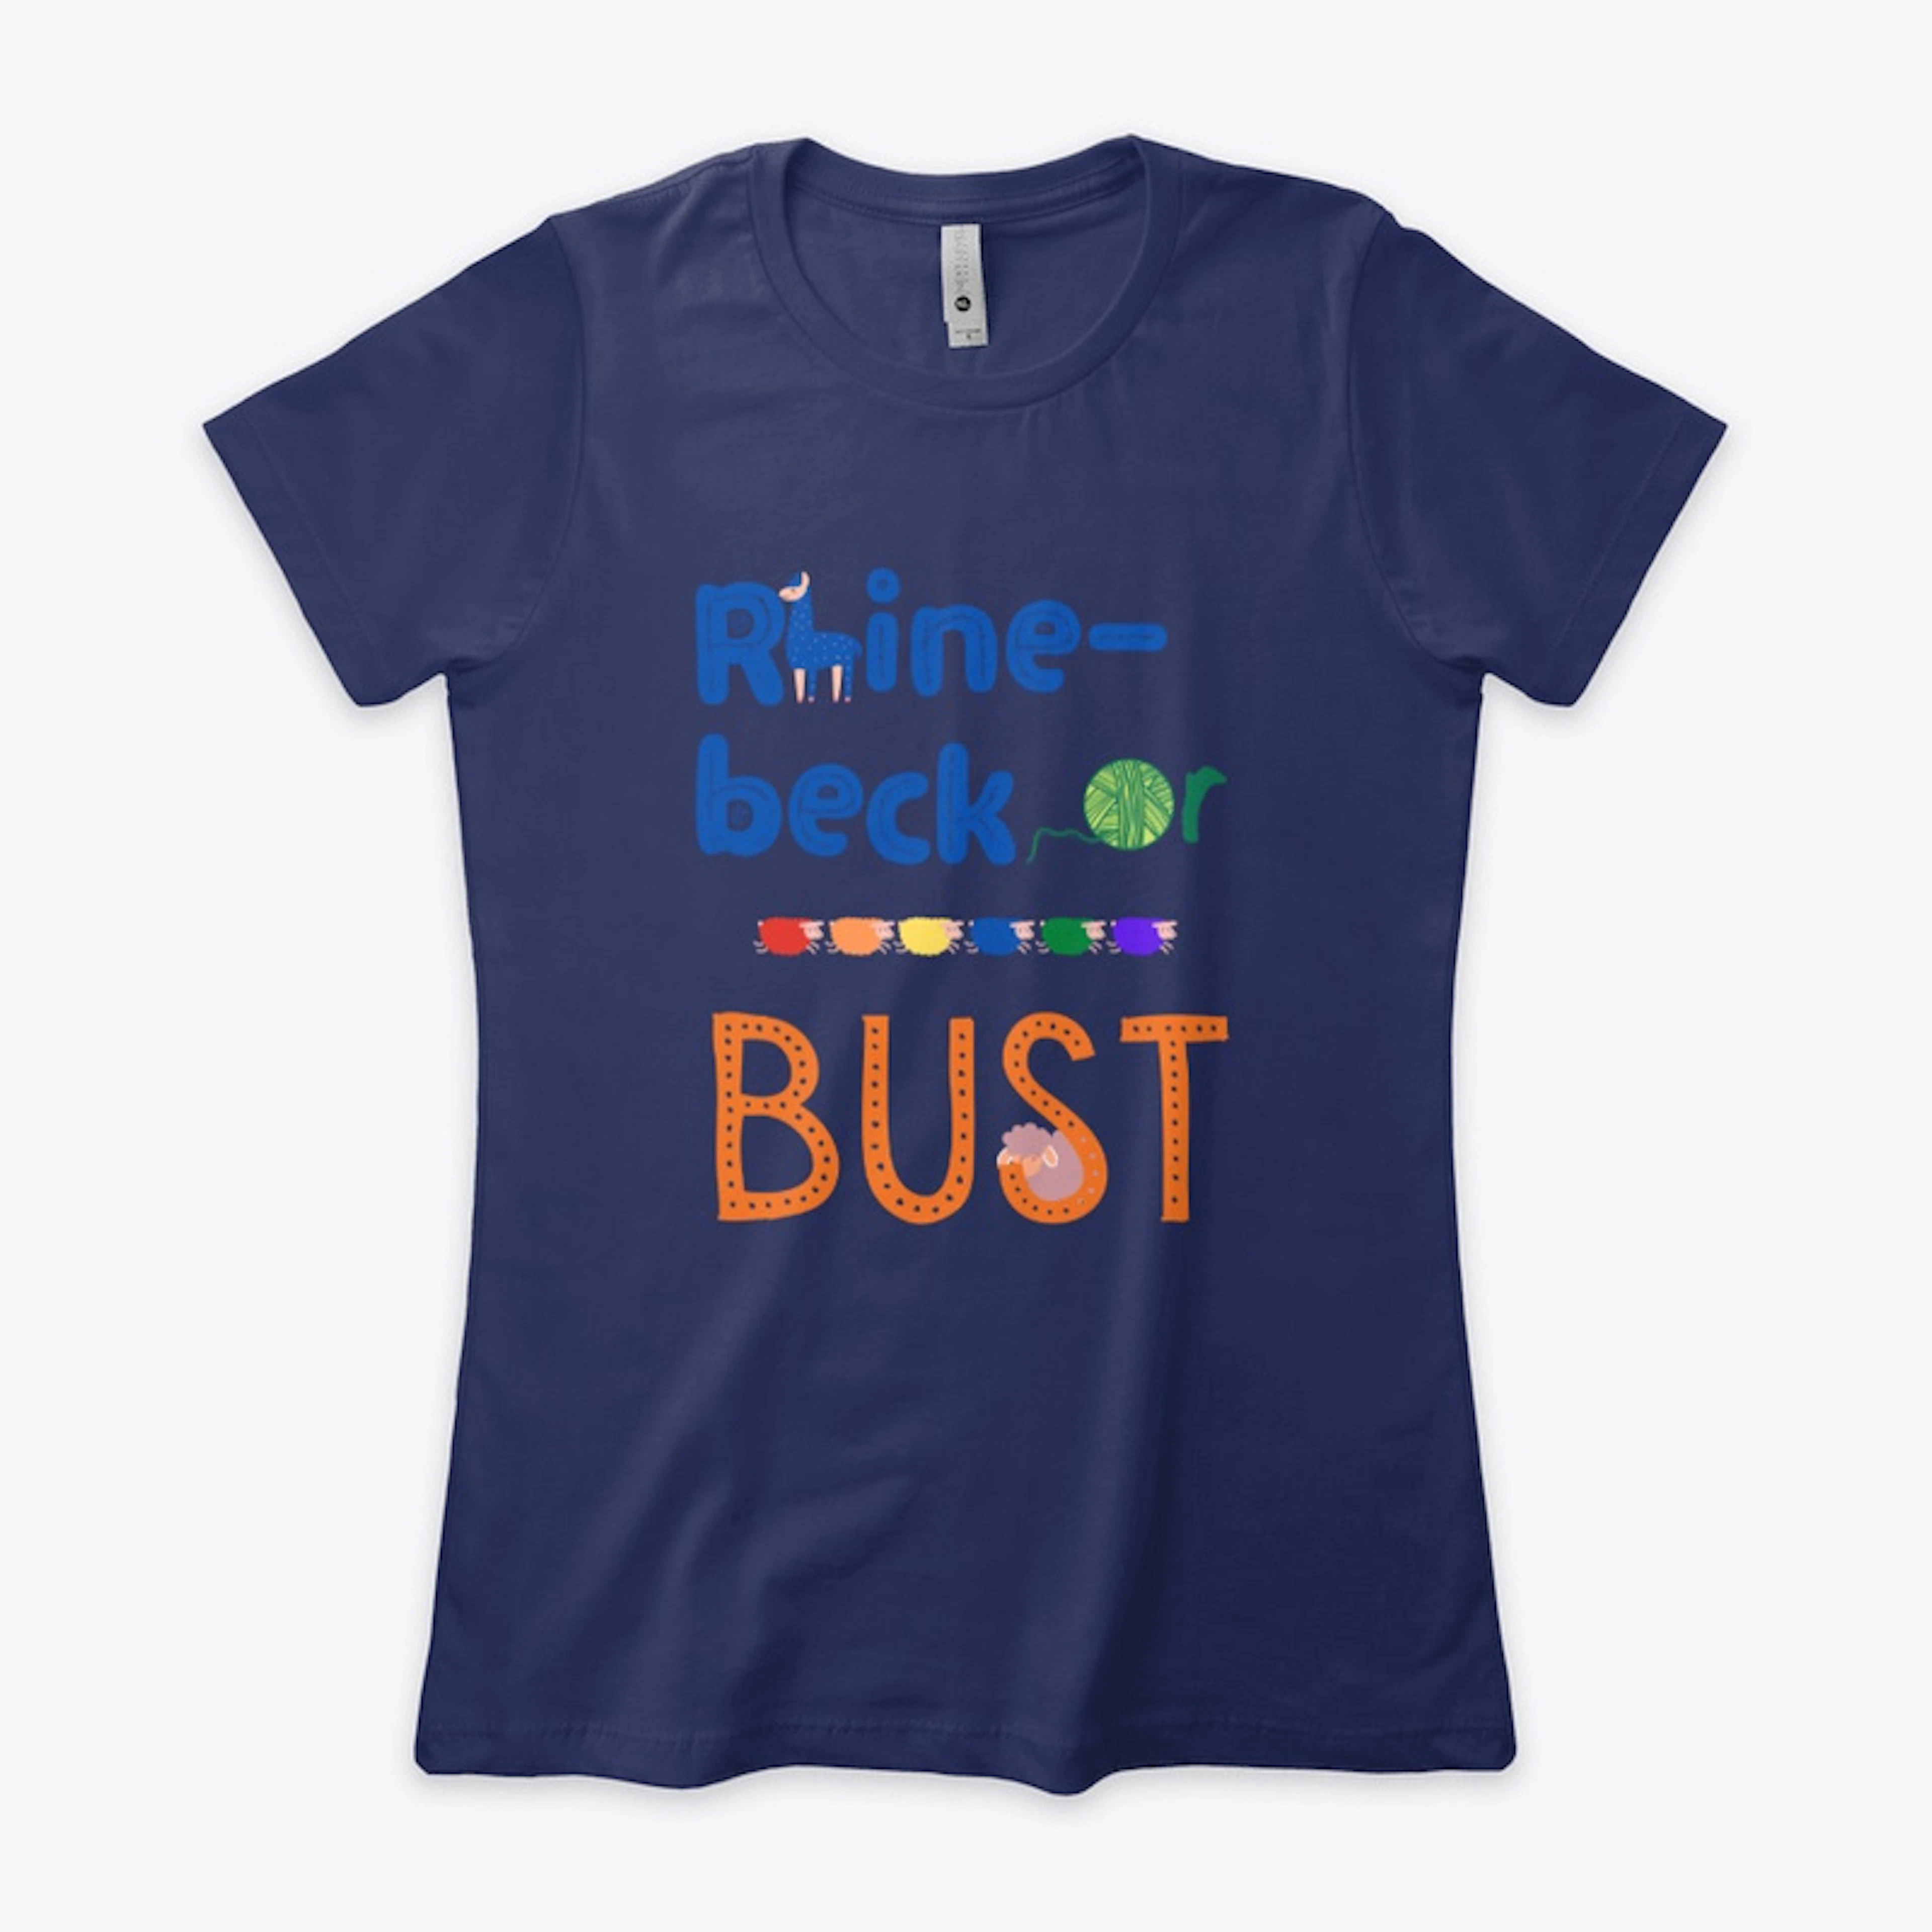 Rhinebeck or Bust Knitting Shirt